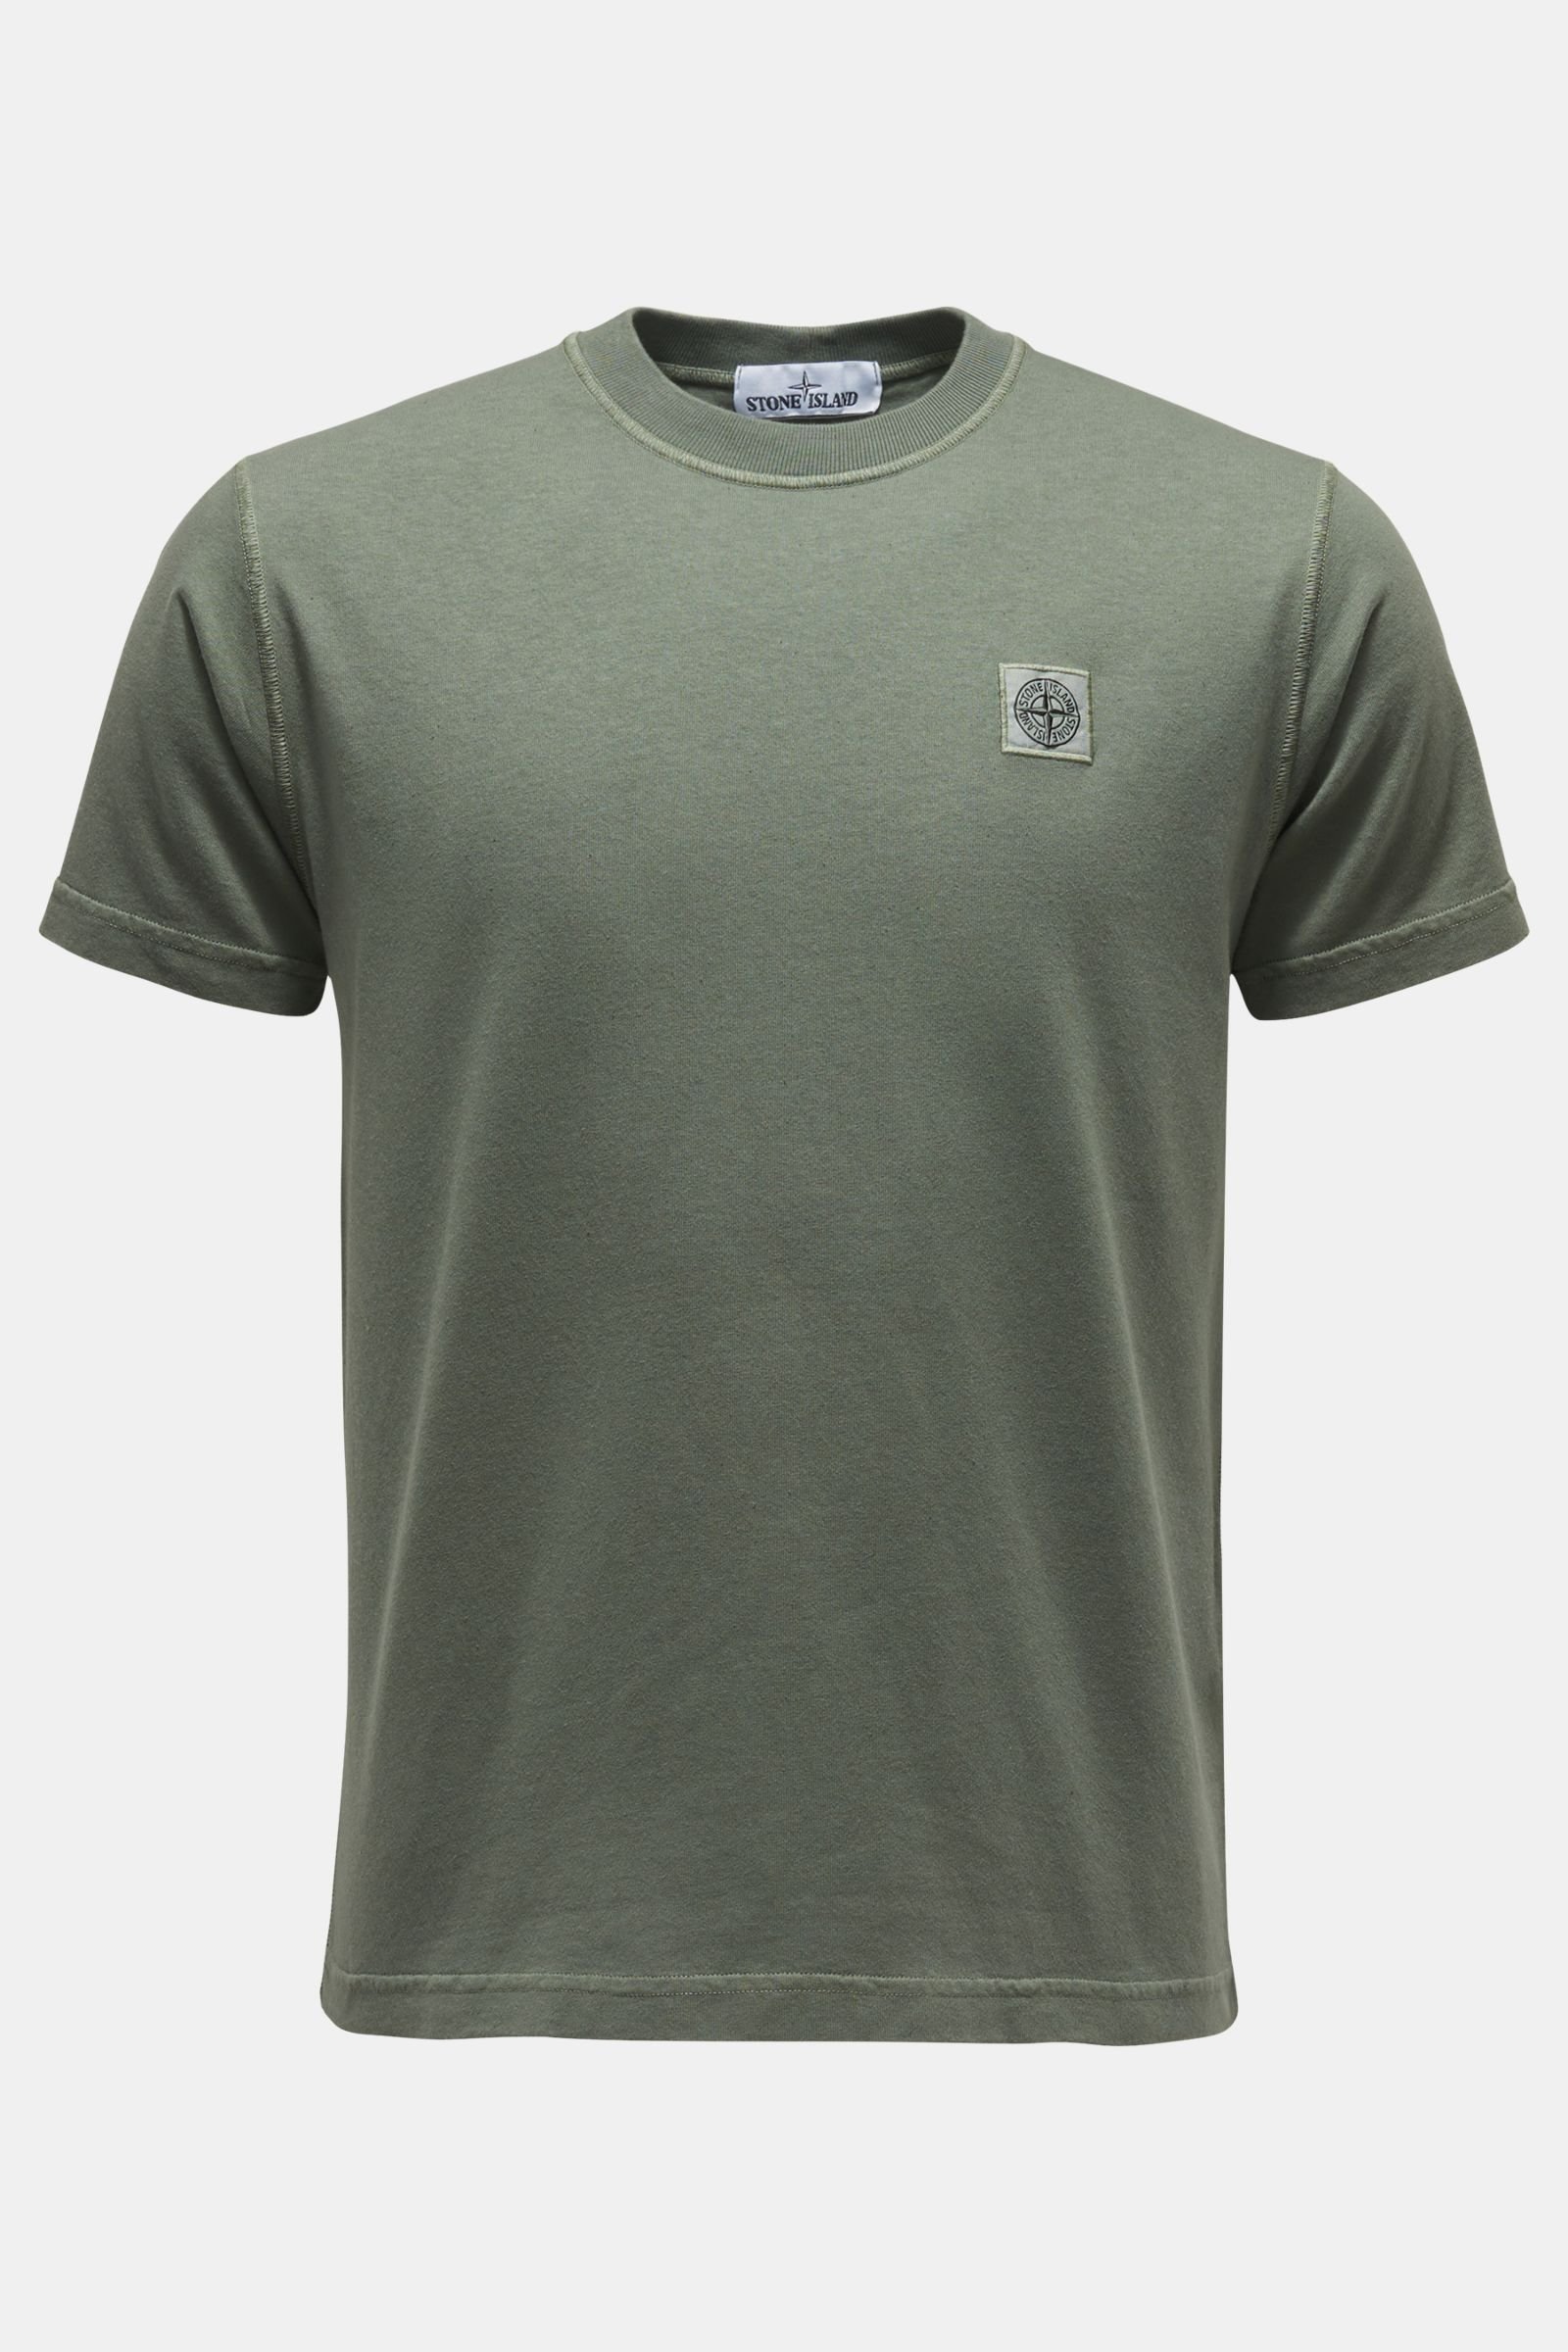 Crew neck T-shirt grey green